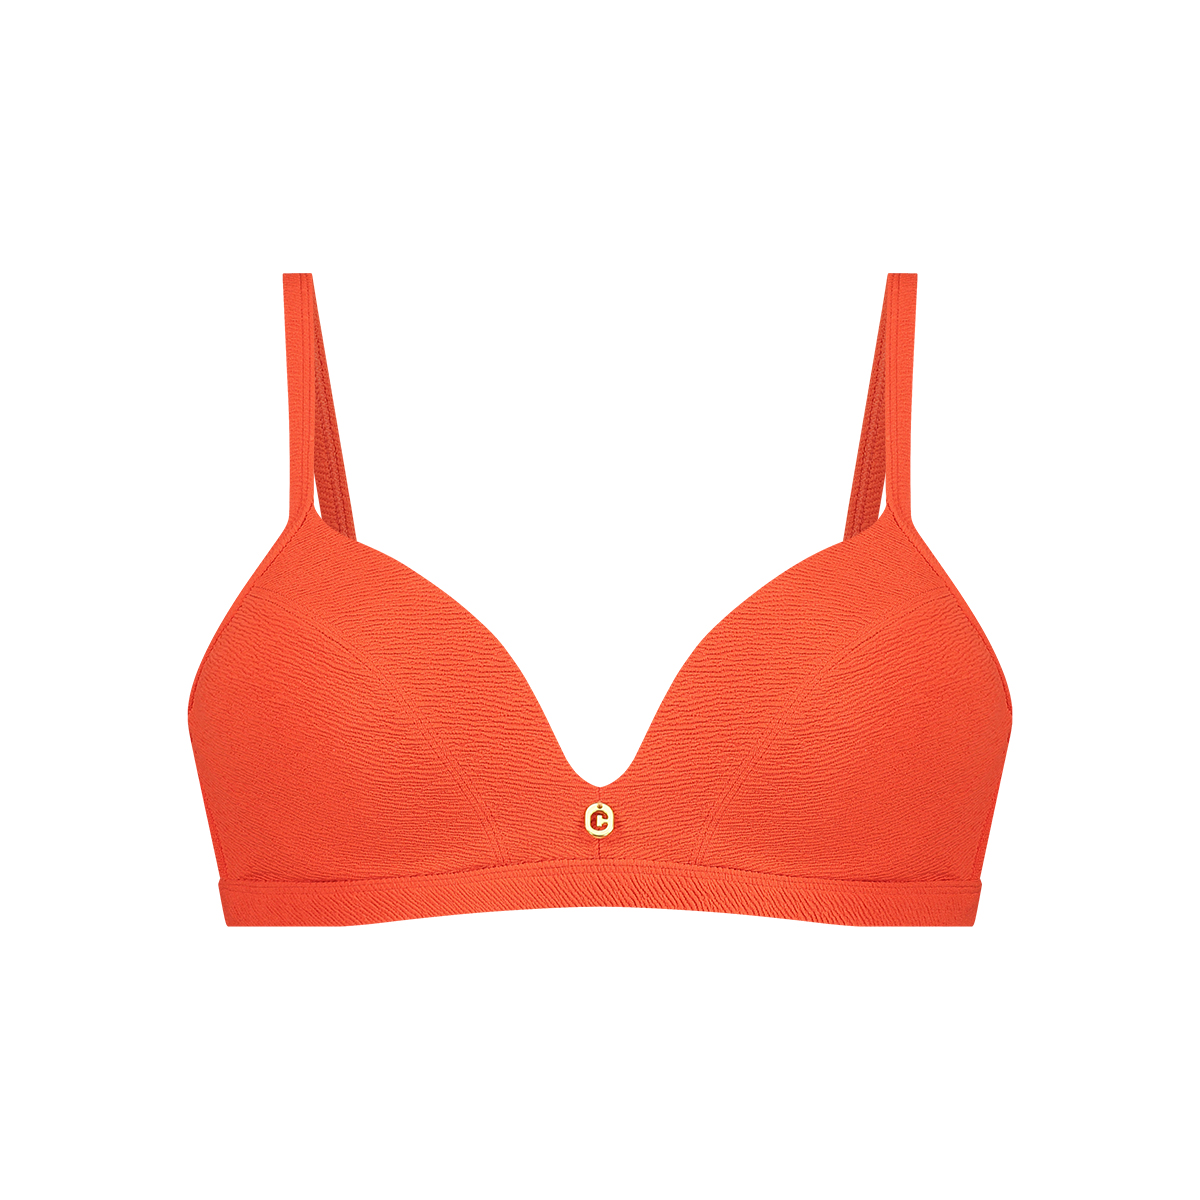 triangle bikini top summer red relief